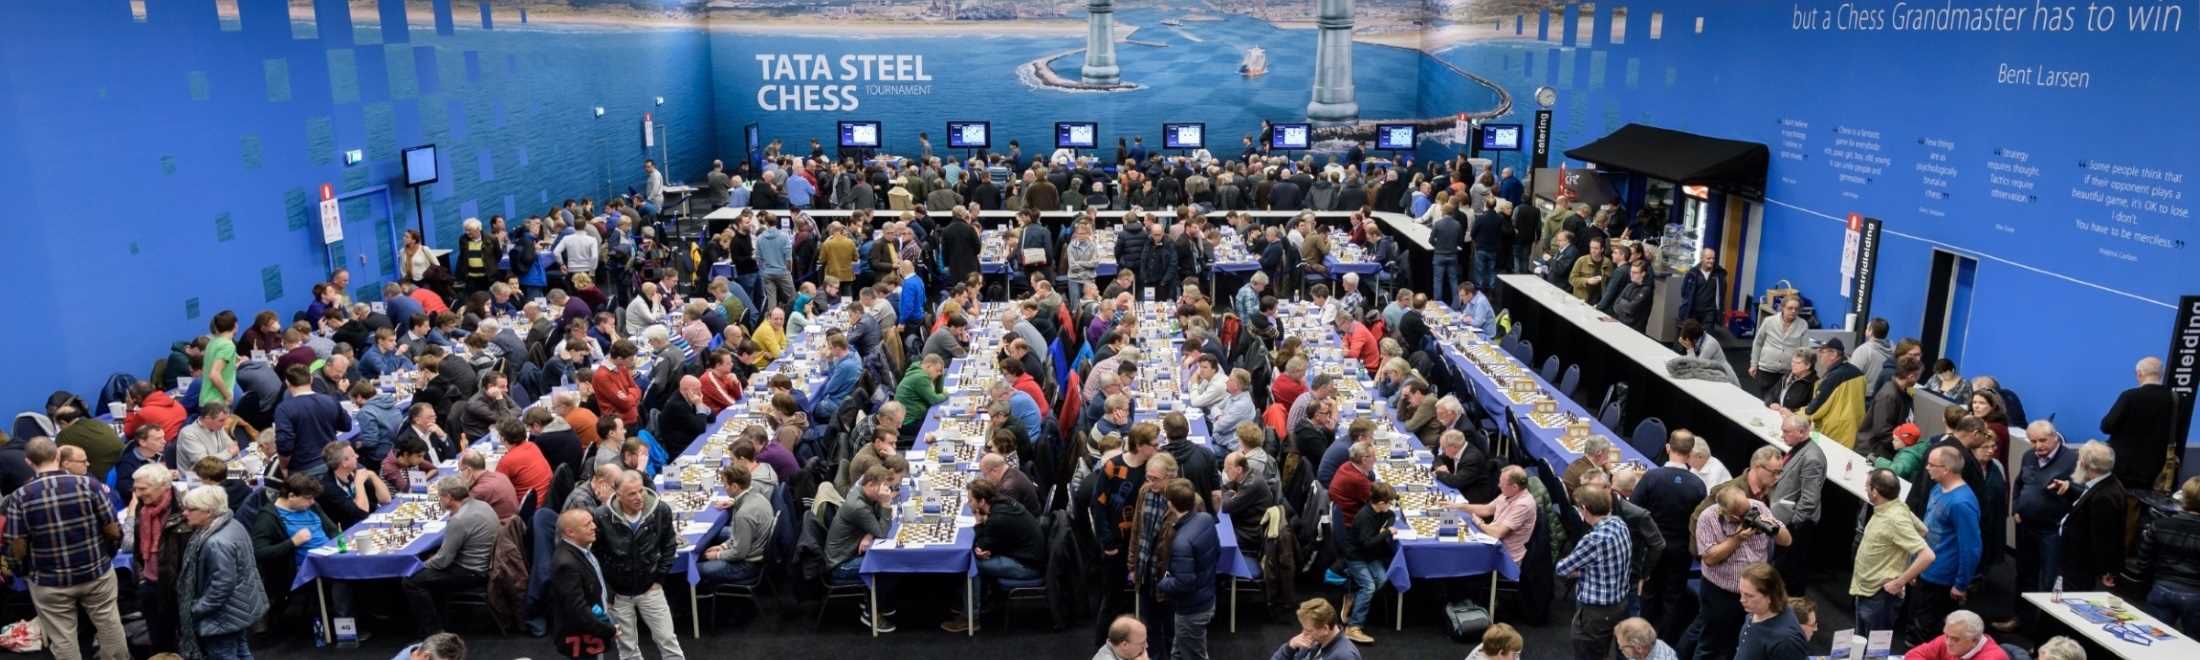 The Tata Steel Chess Tournament